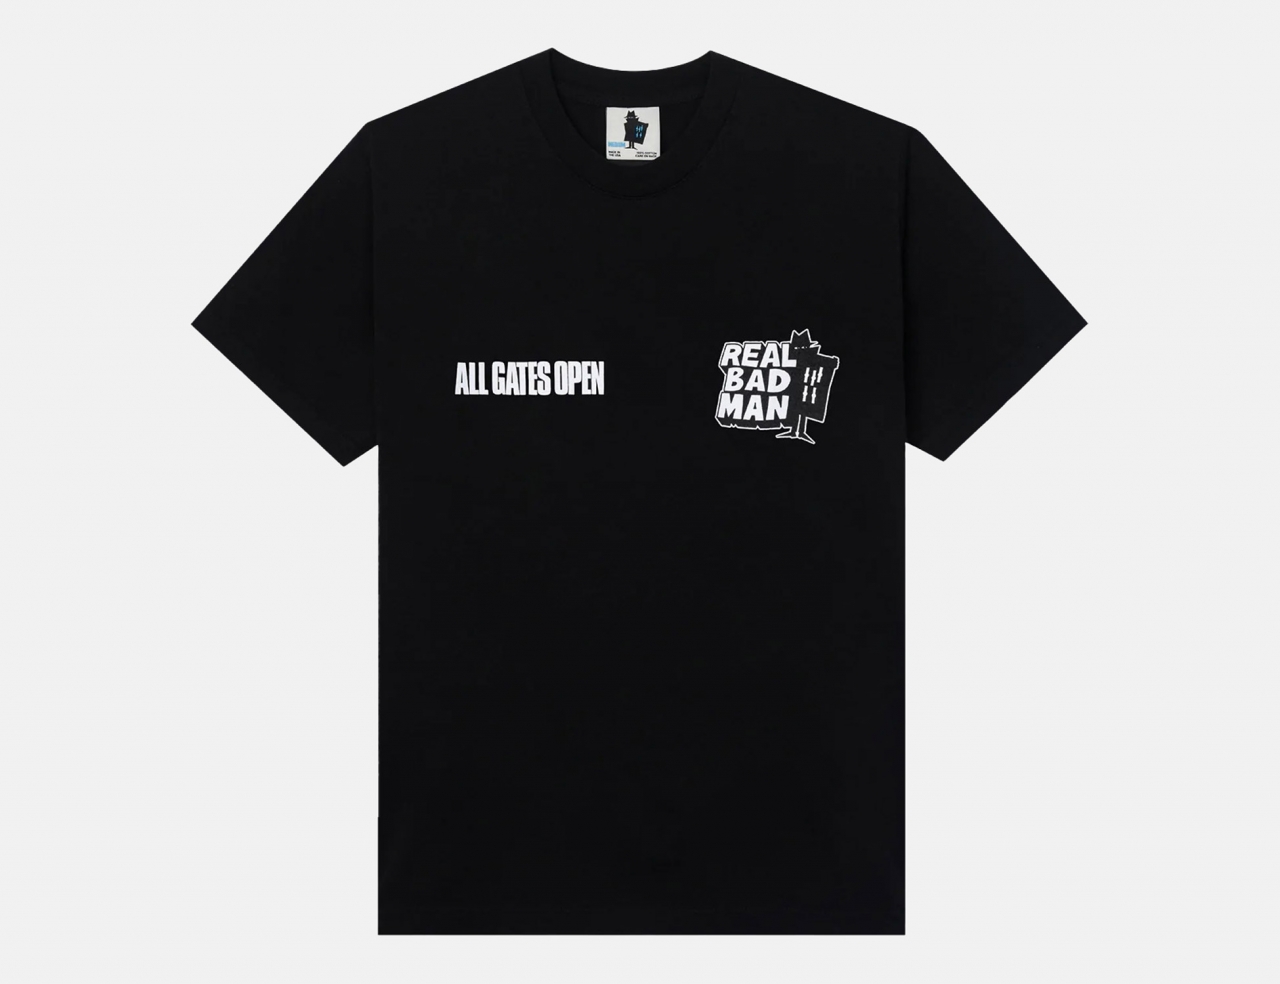 Real Bad Man All Gates Open T-Shirt - Black